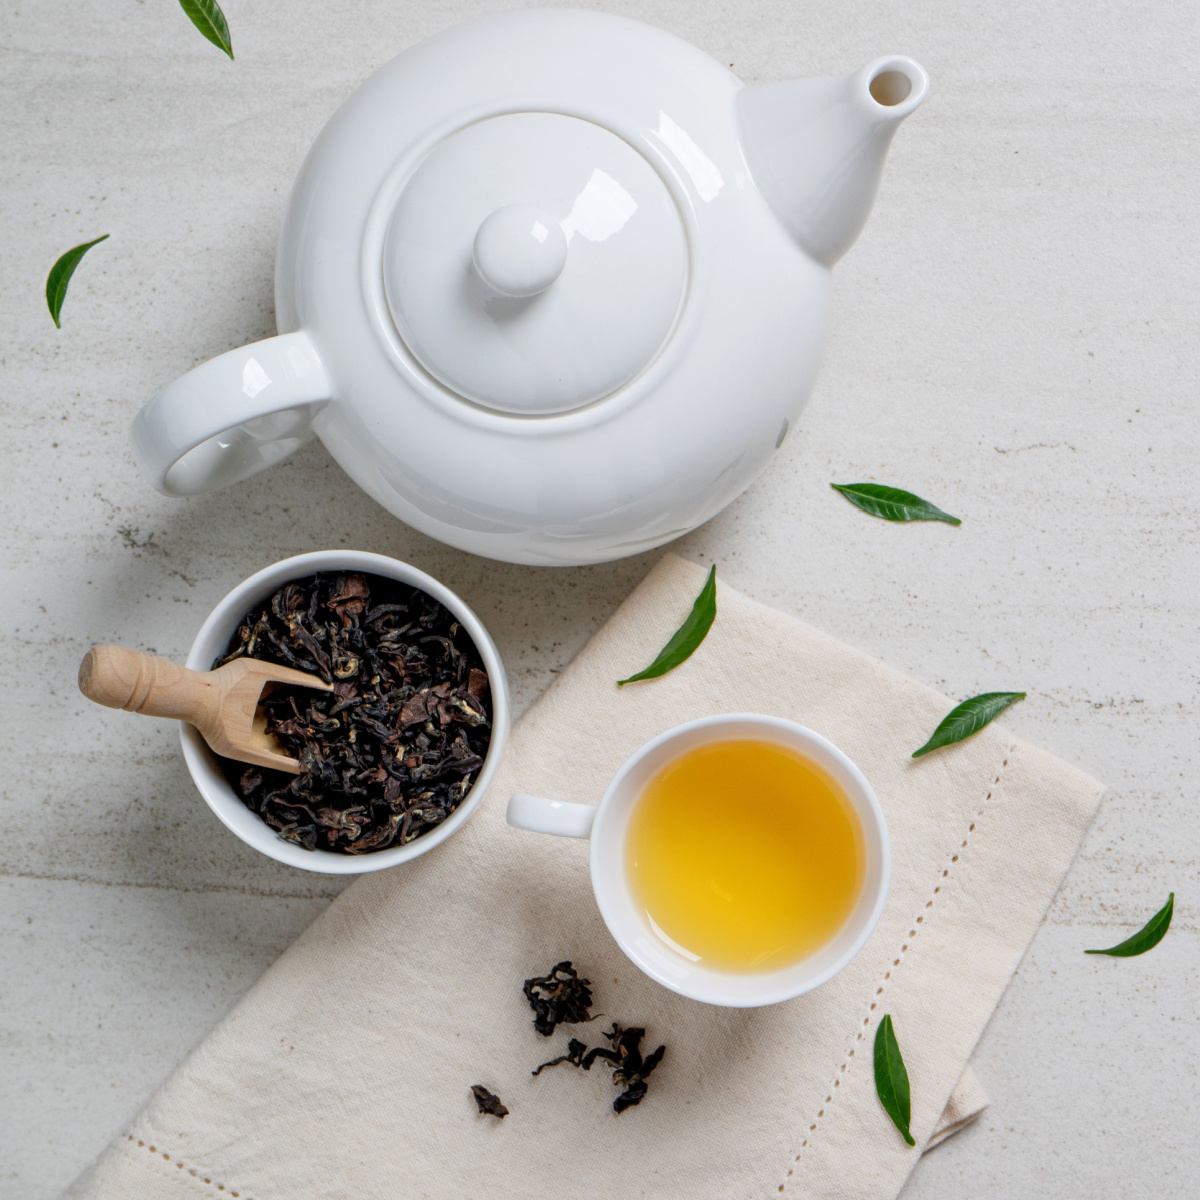 green tea and teapot